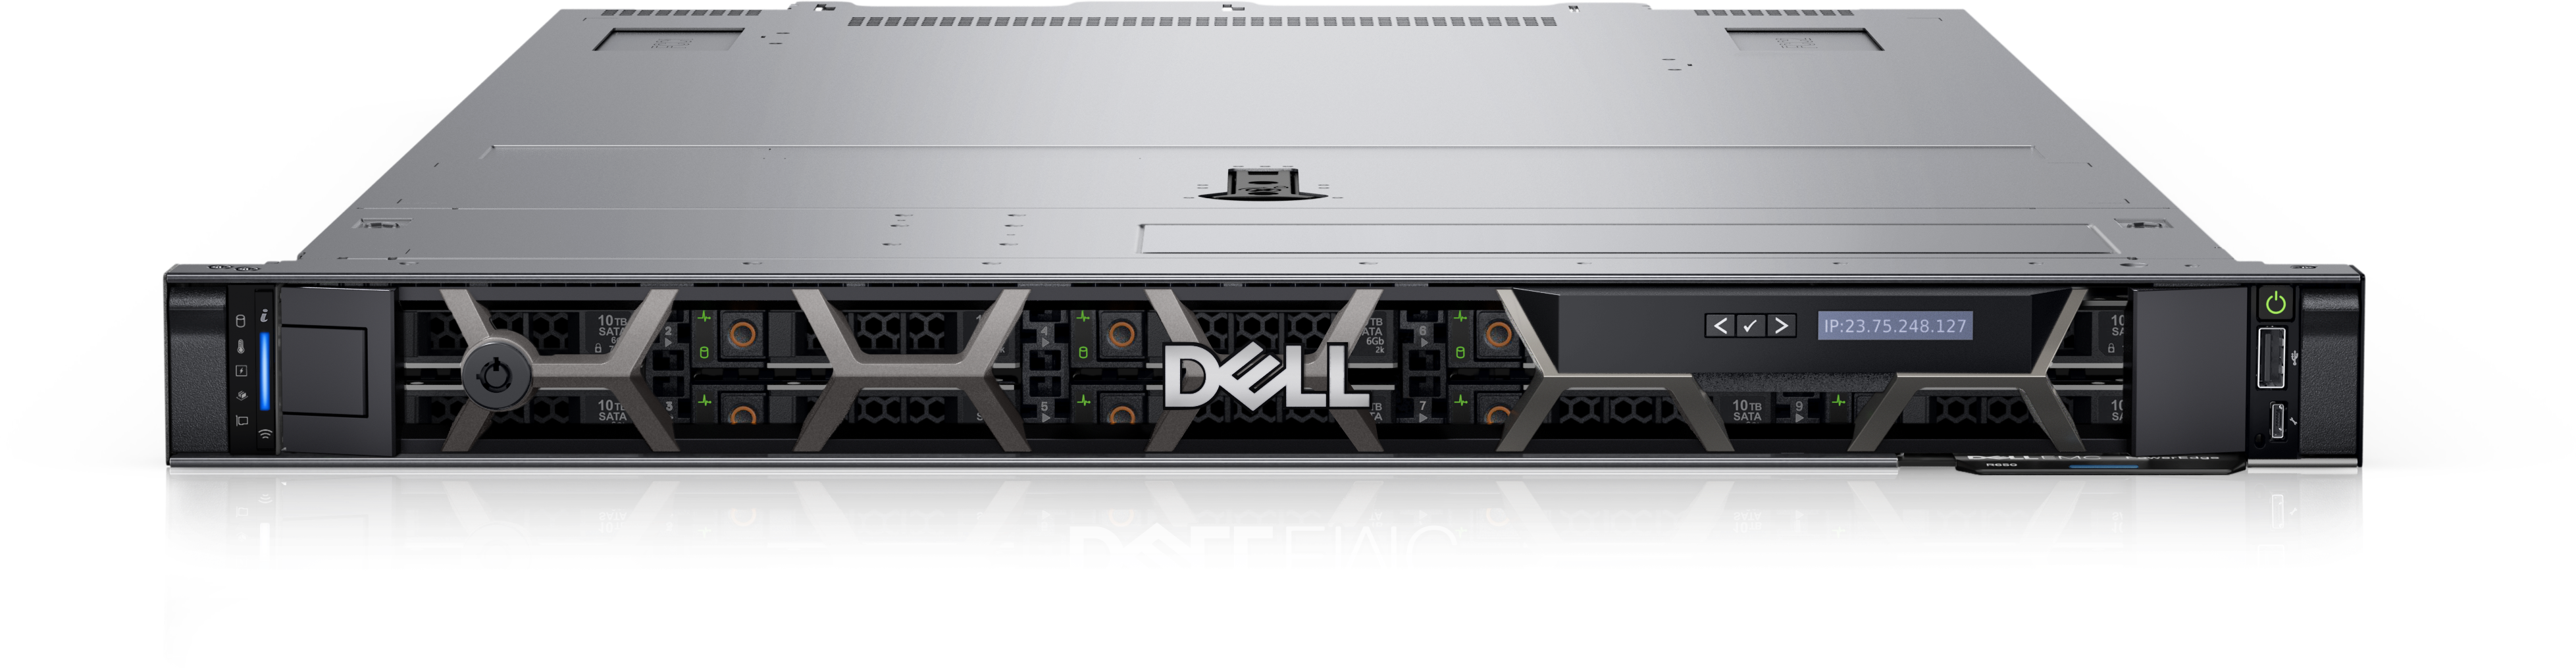 Dell EMC PowerEdge R650ラックサーバー | Dell 日本